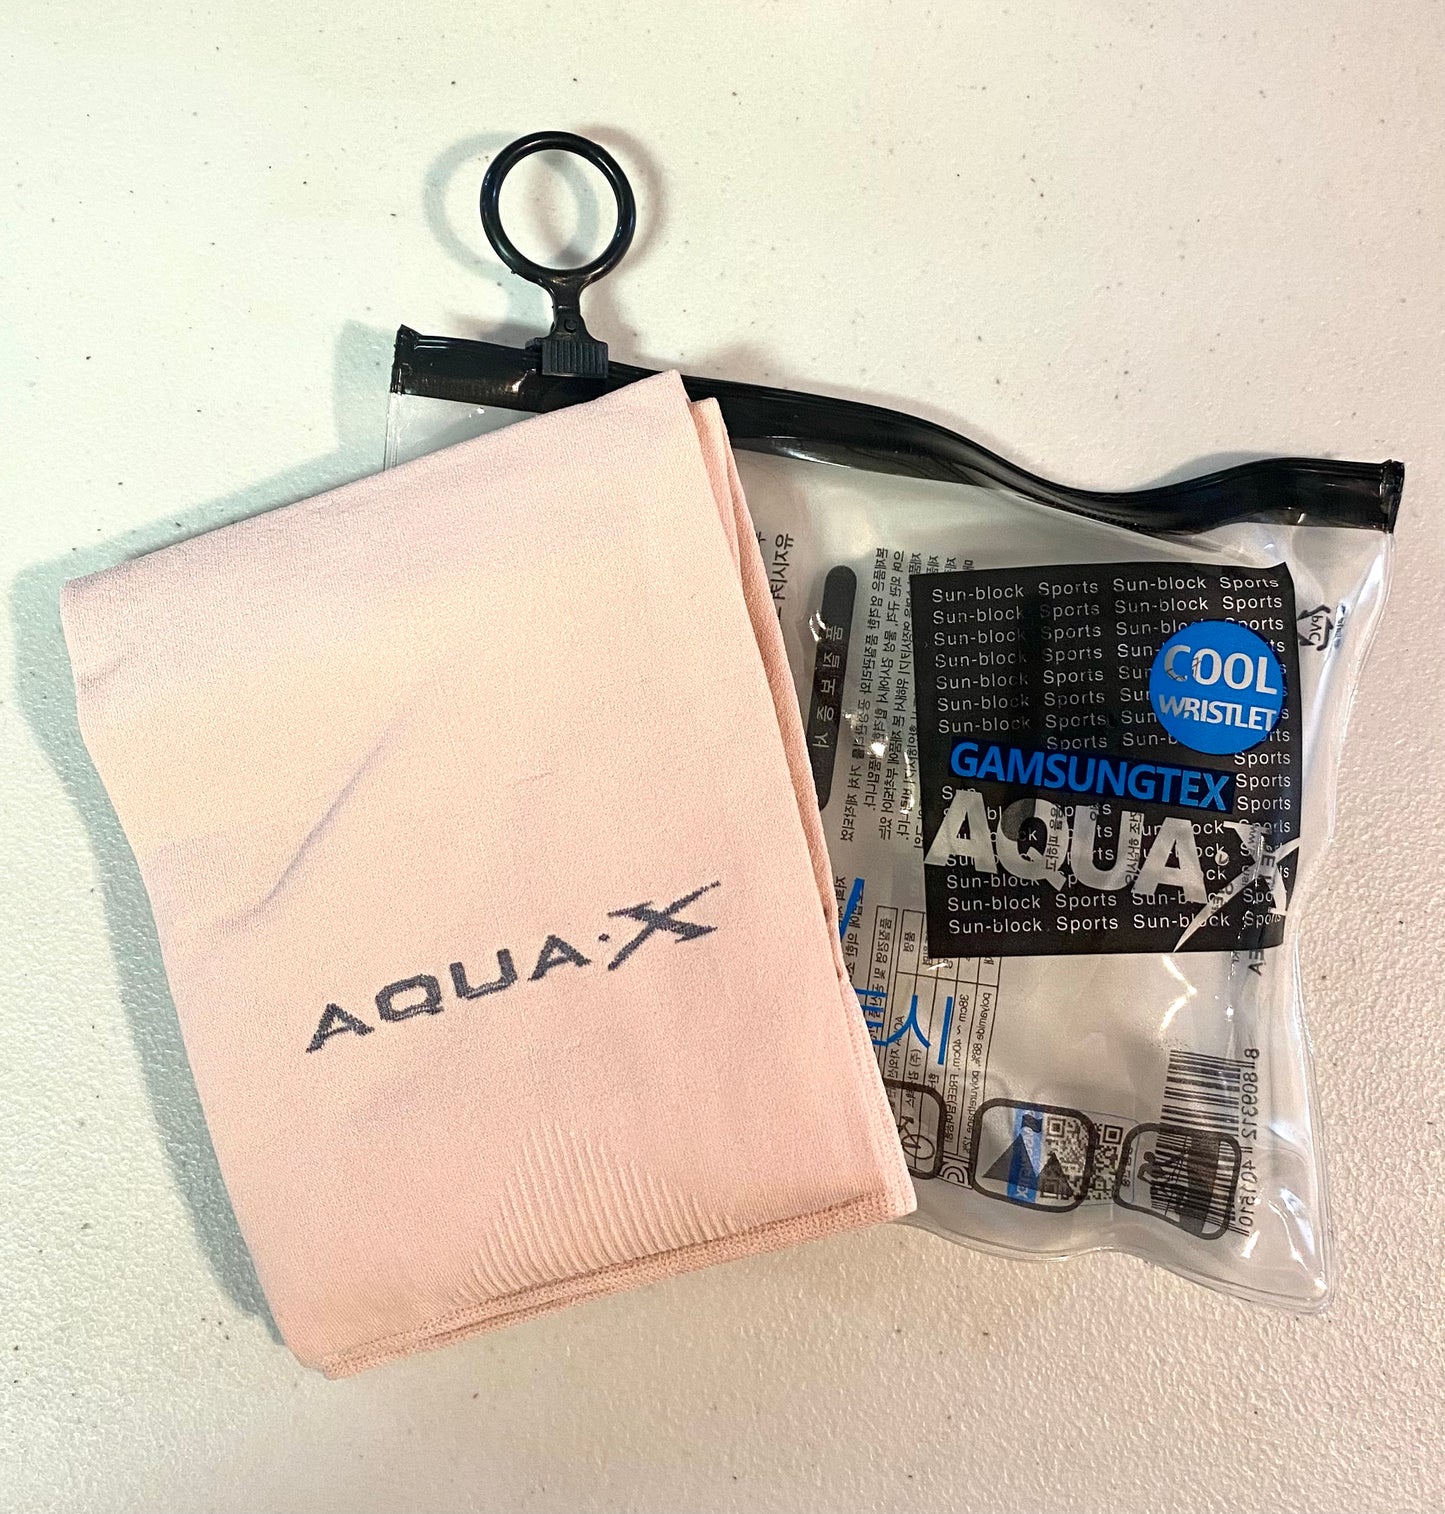 Aqua-X Cool Arm Sleeves 1